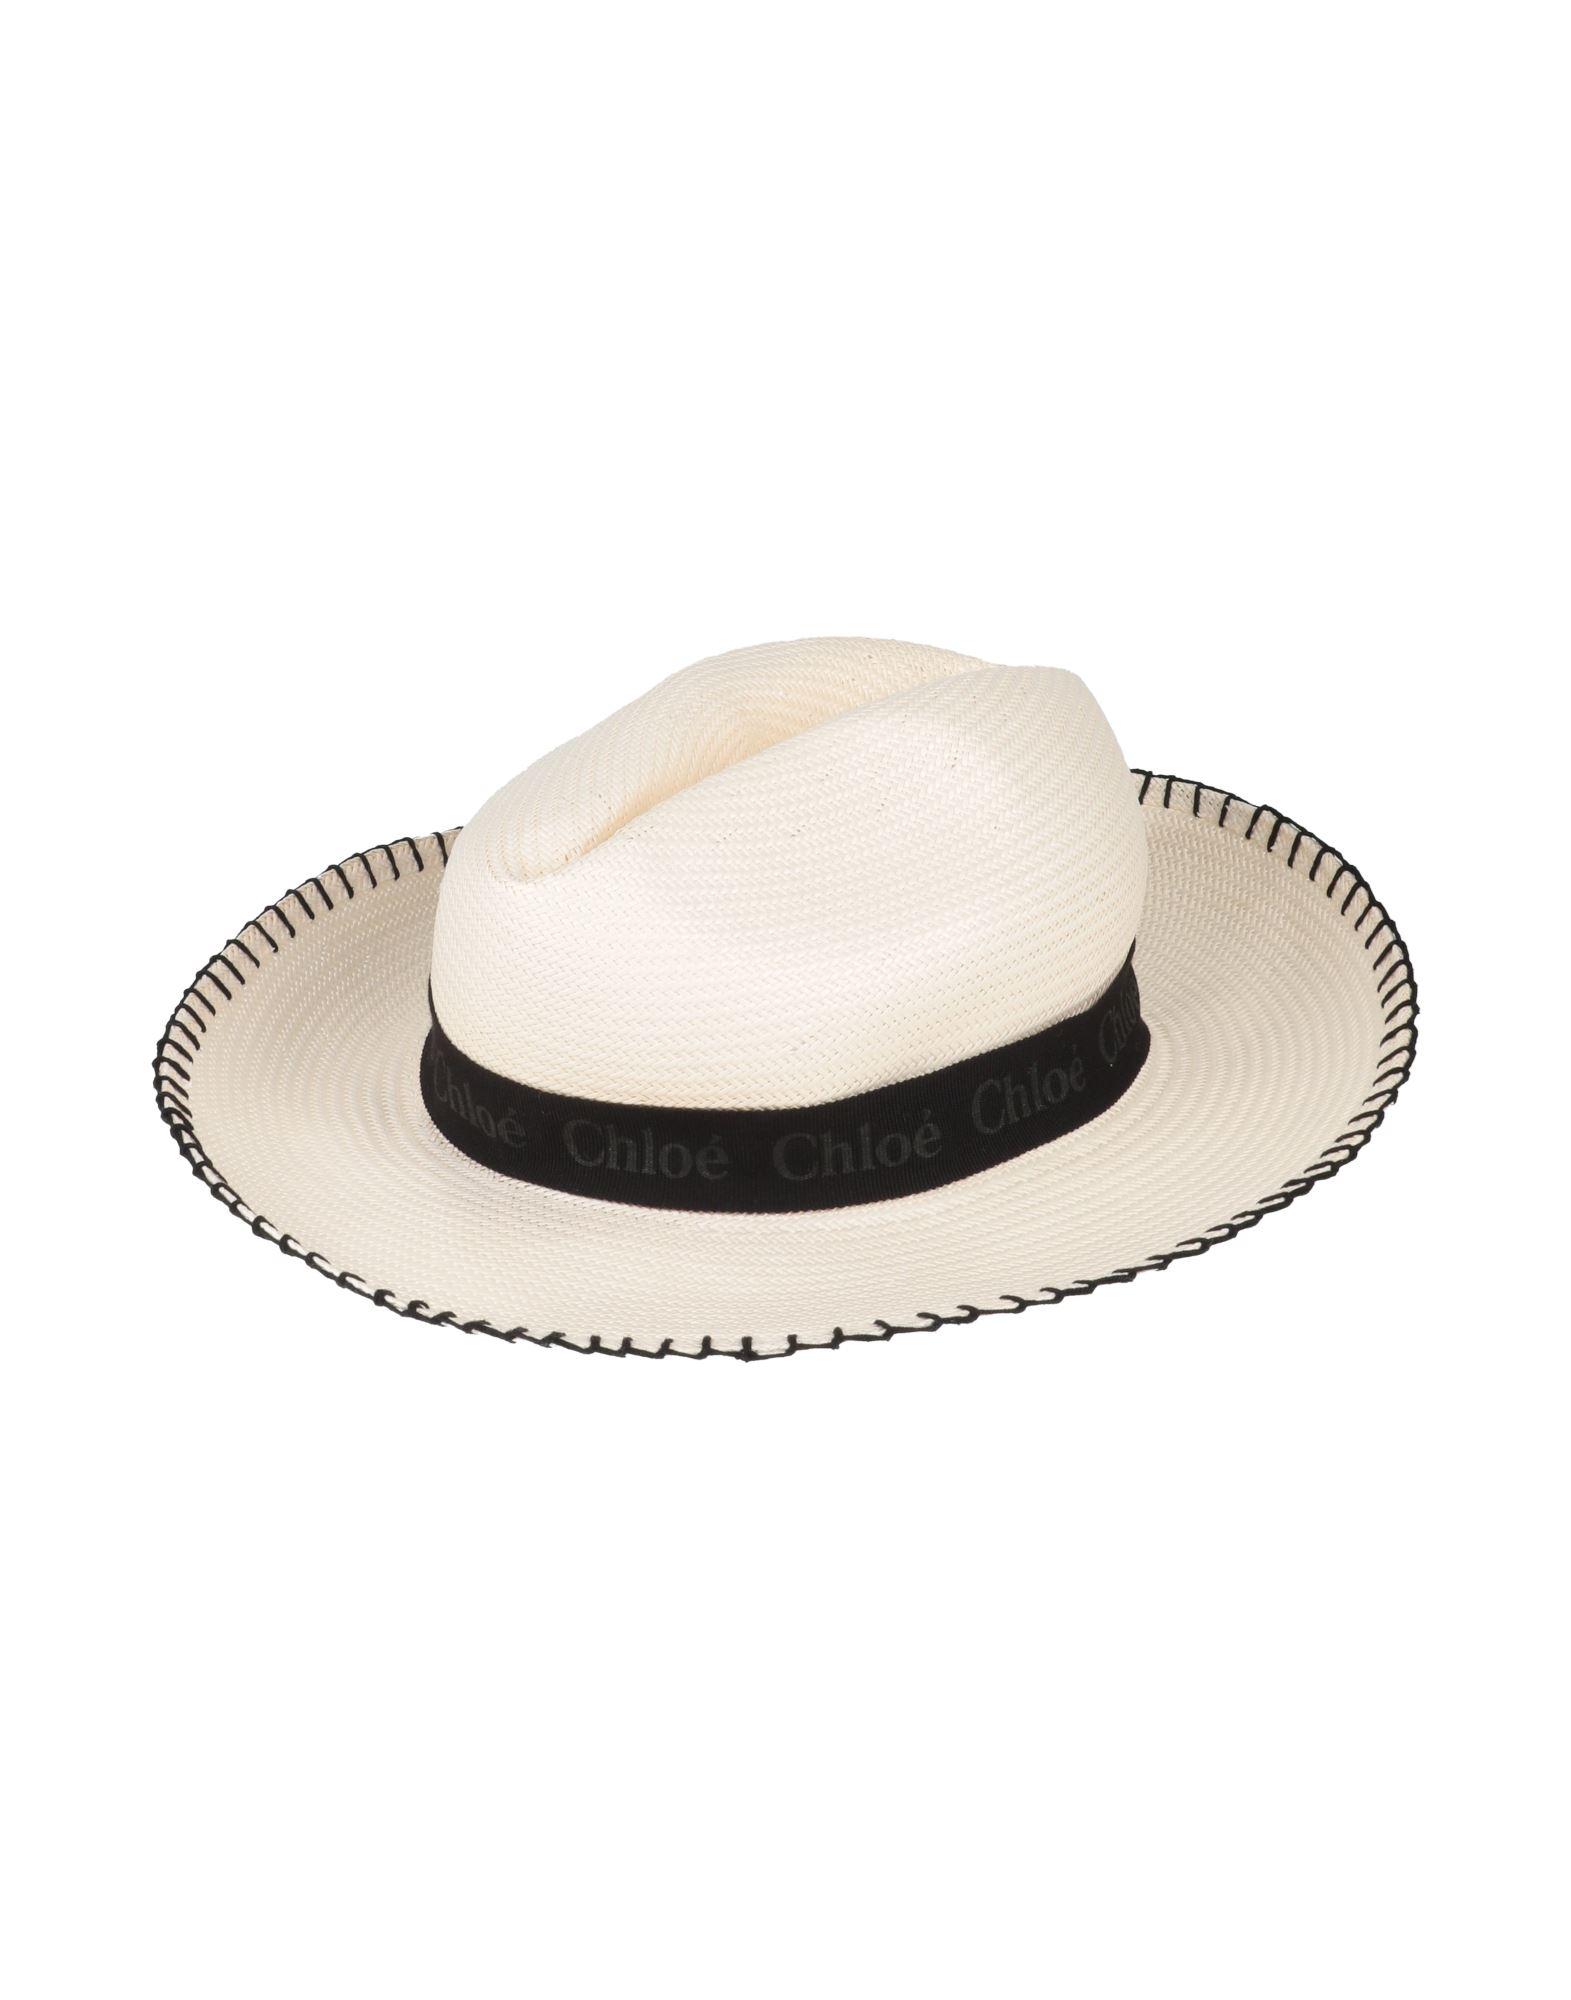 Chloé Hat in White | Lyst